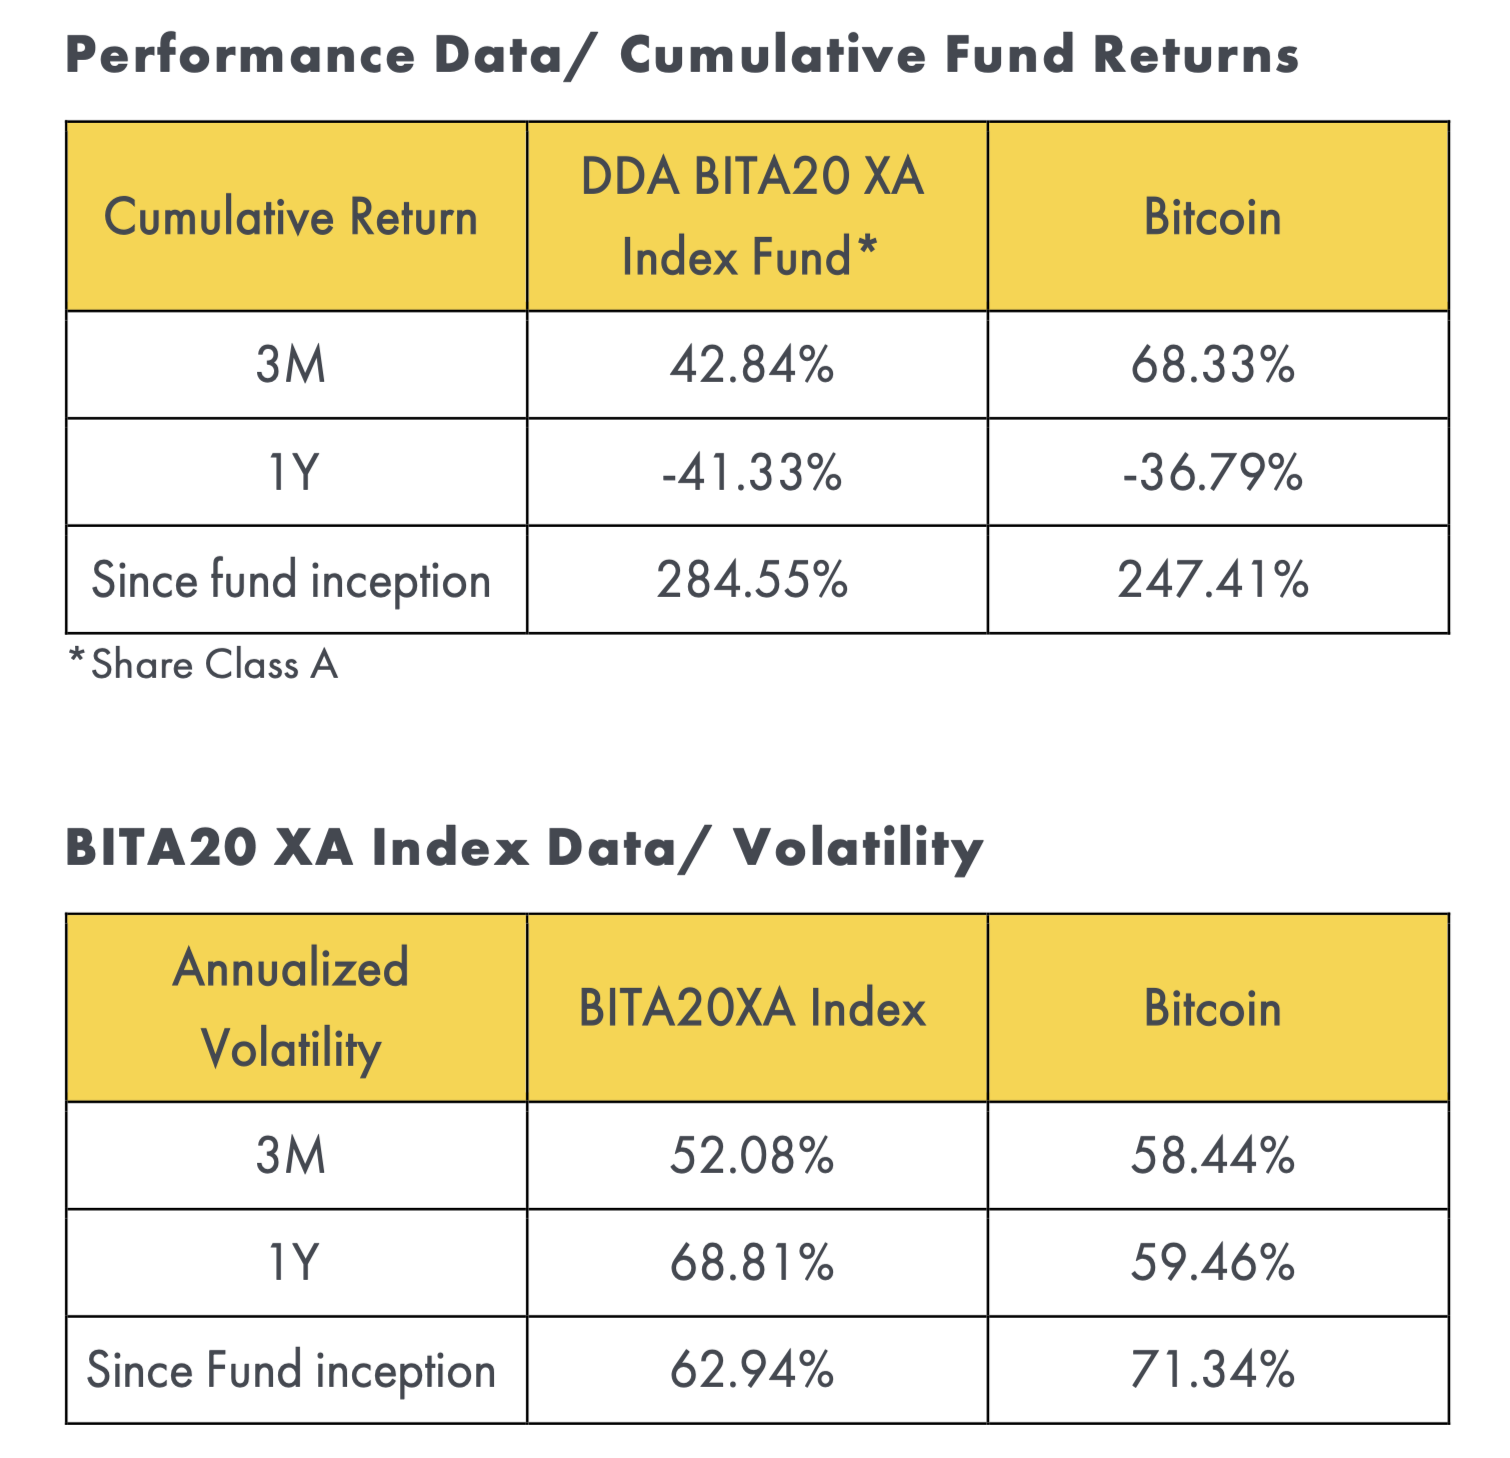 DDA BITA20 XA
Crypto Asset Index Fund, Crypto index fund, crypto asset index funds, DDA BITA20 Index fund Performance data 